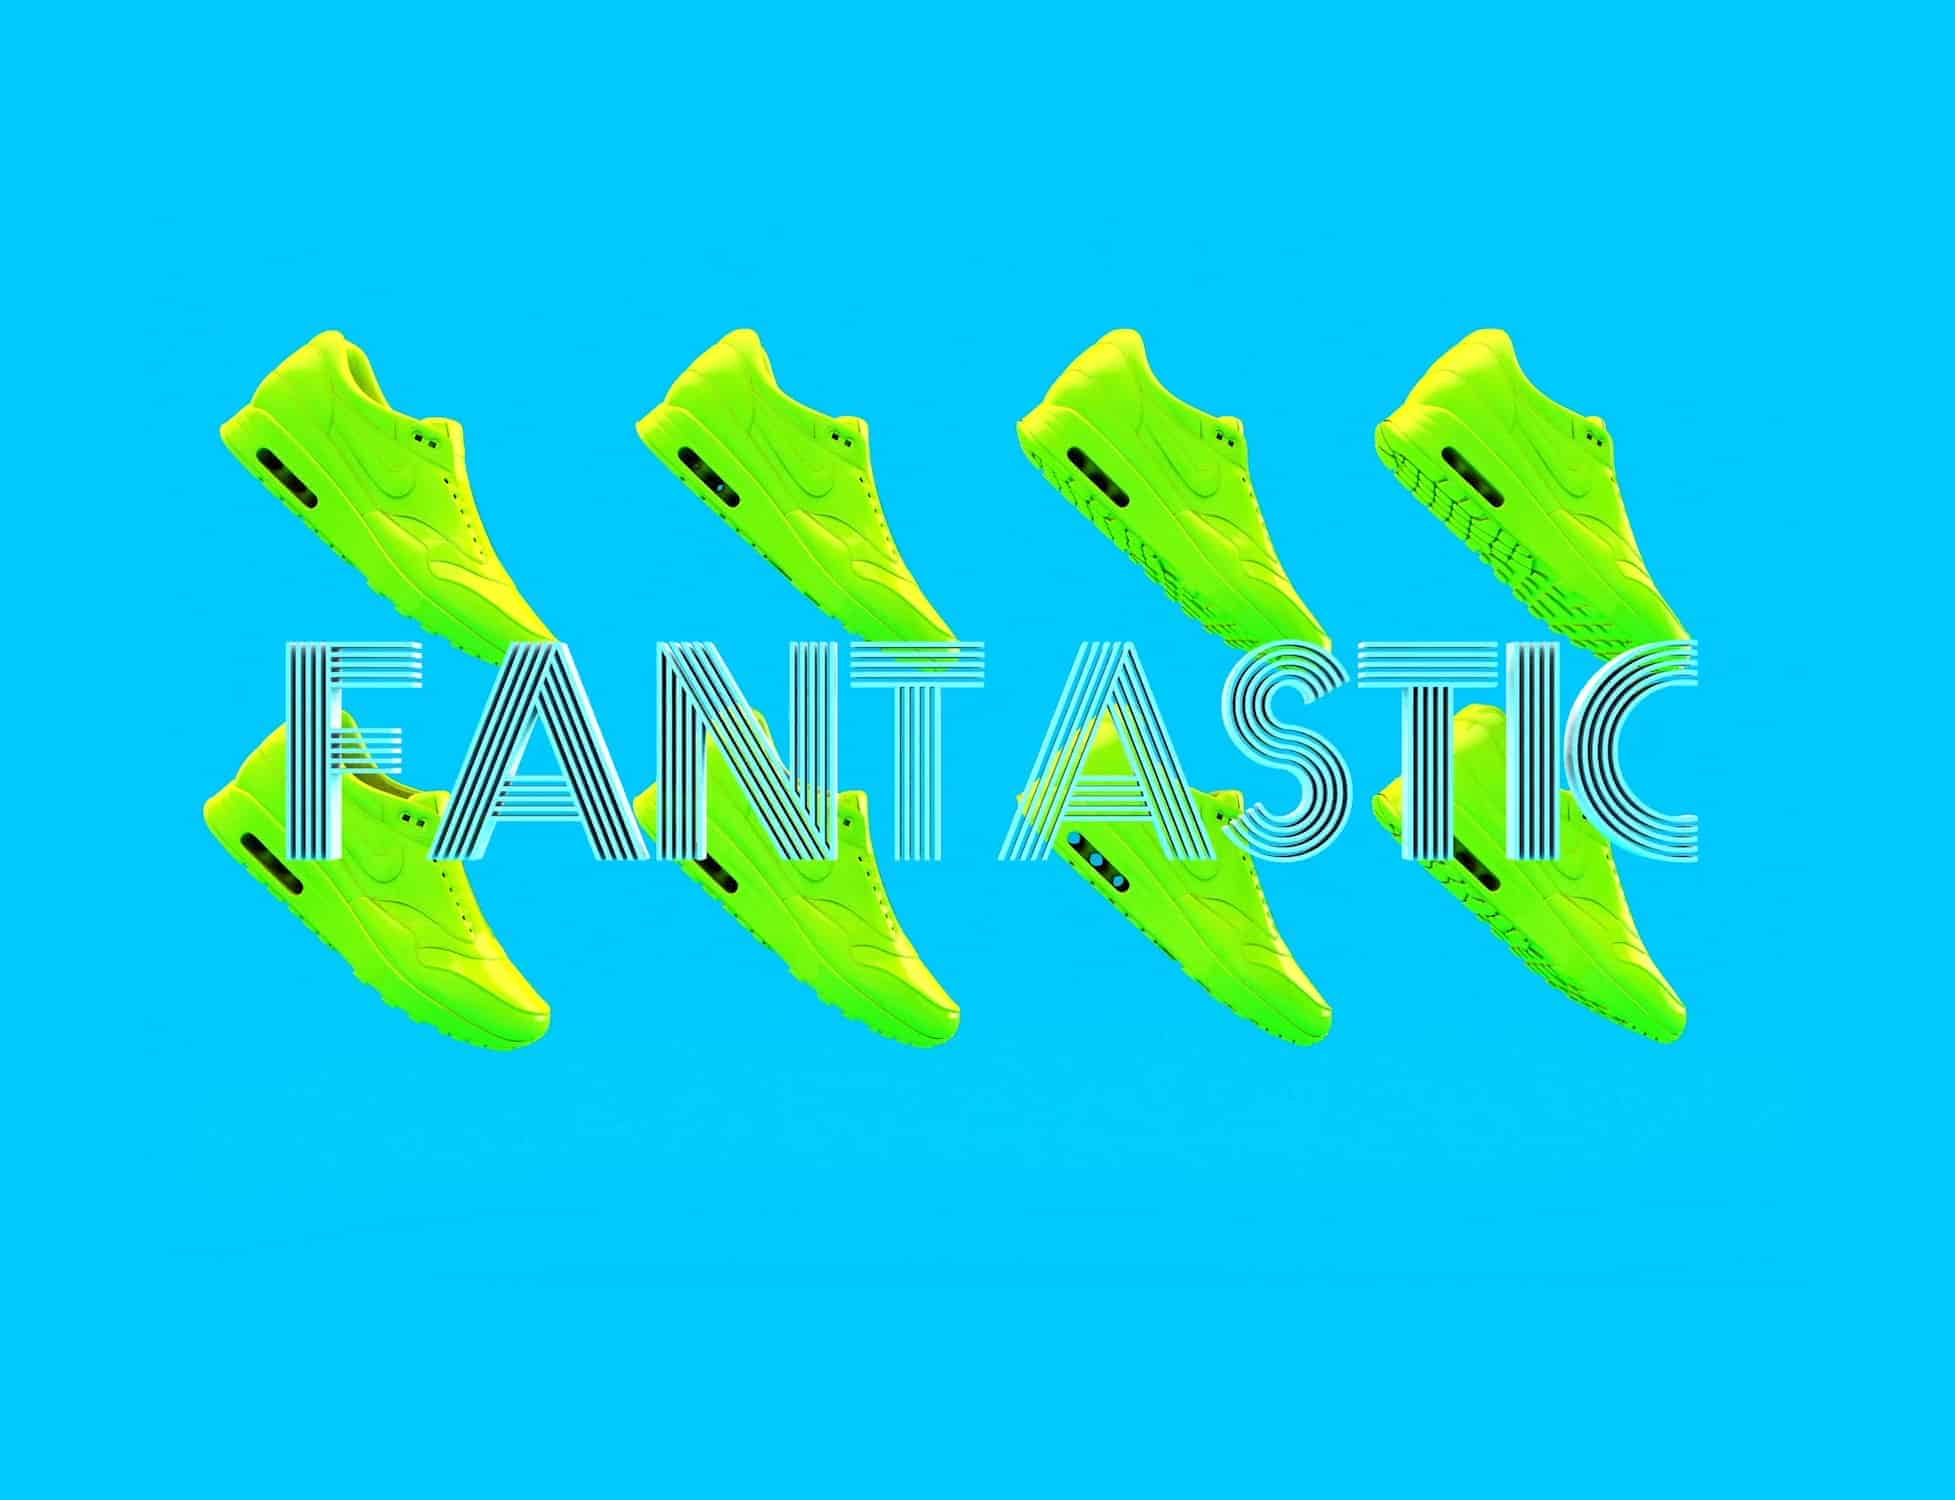 Nike Air Max - All That Plastic